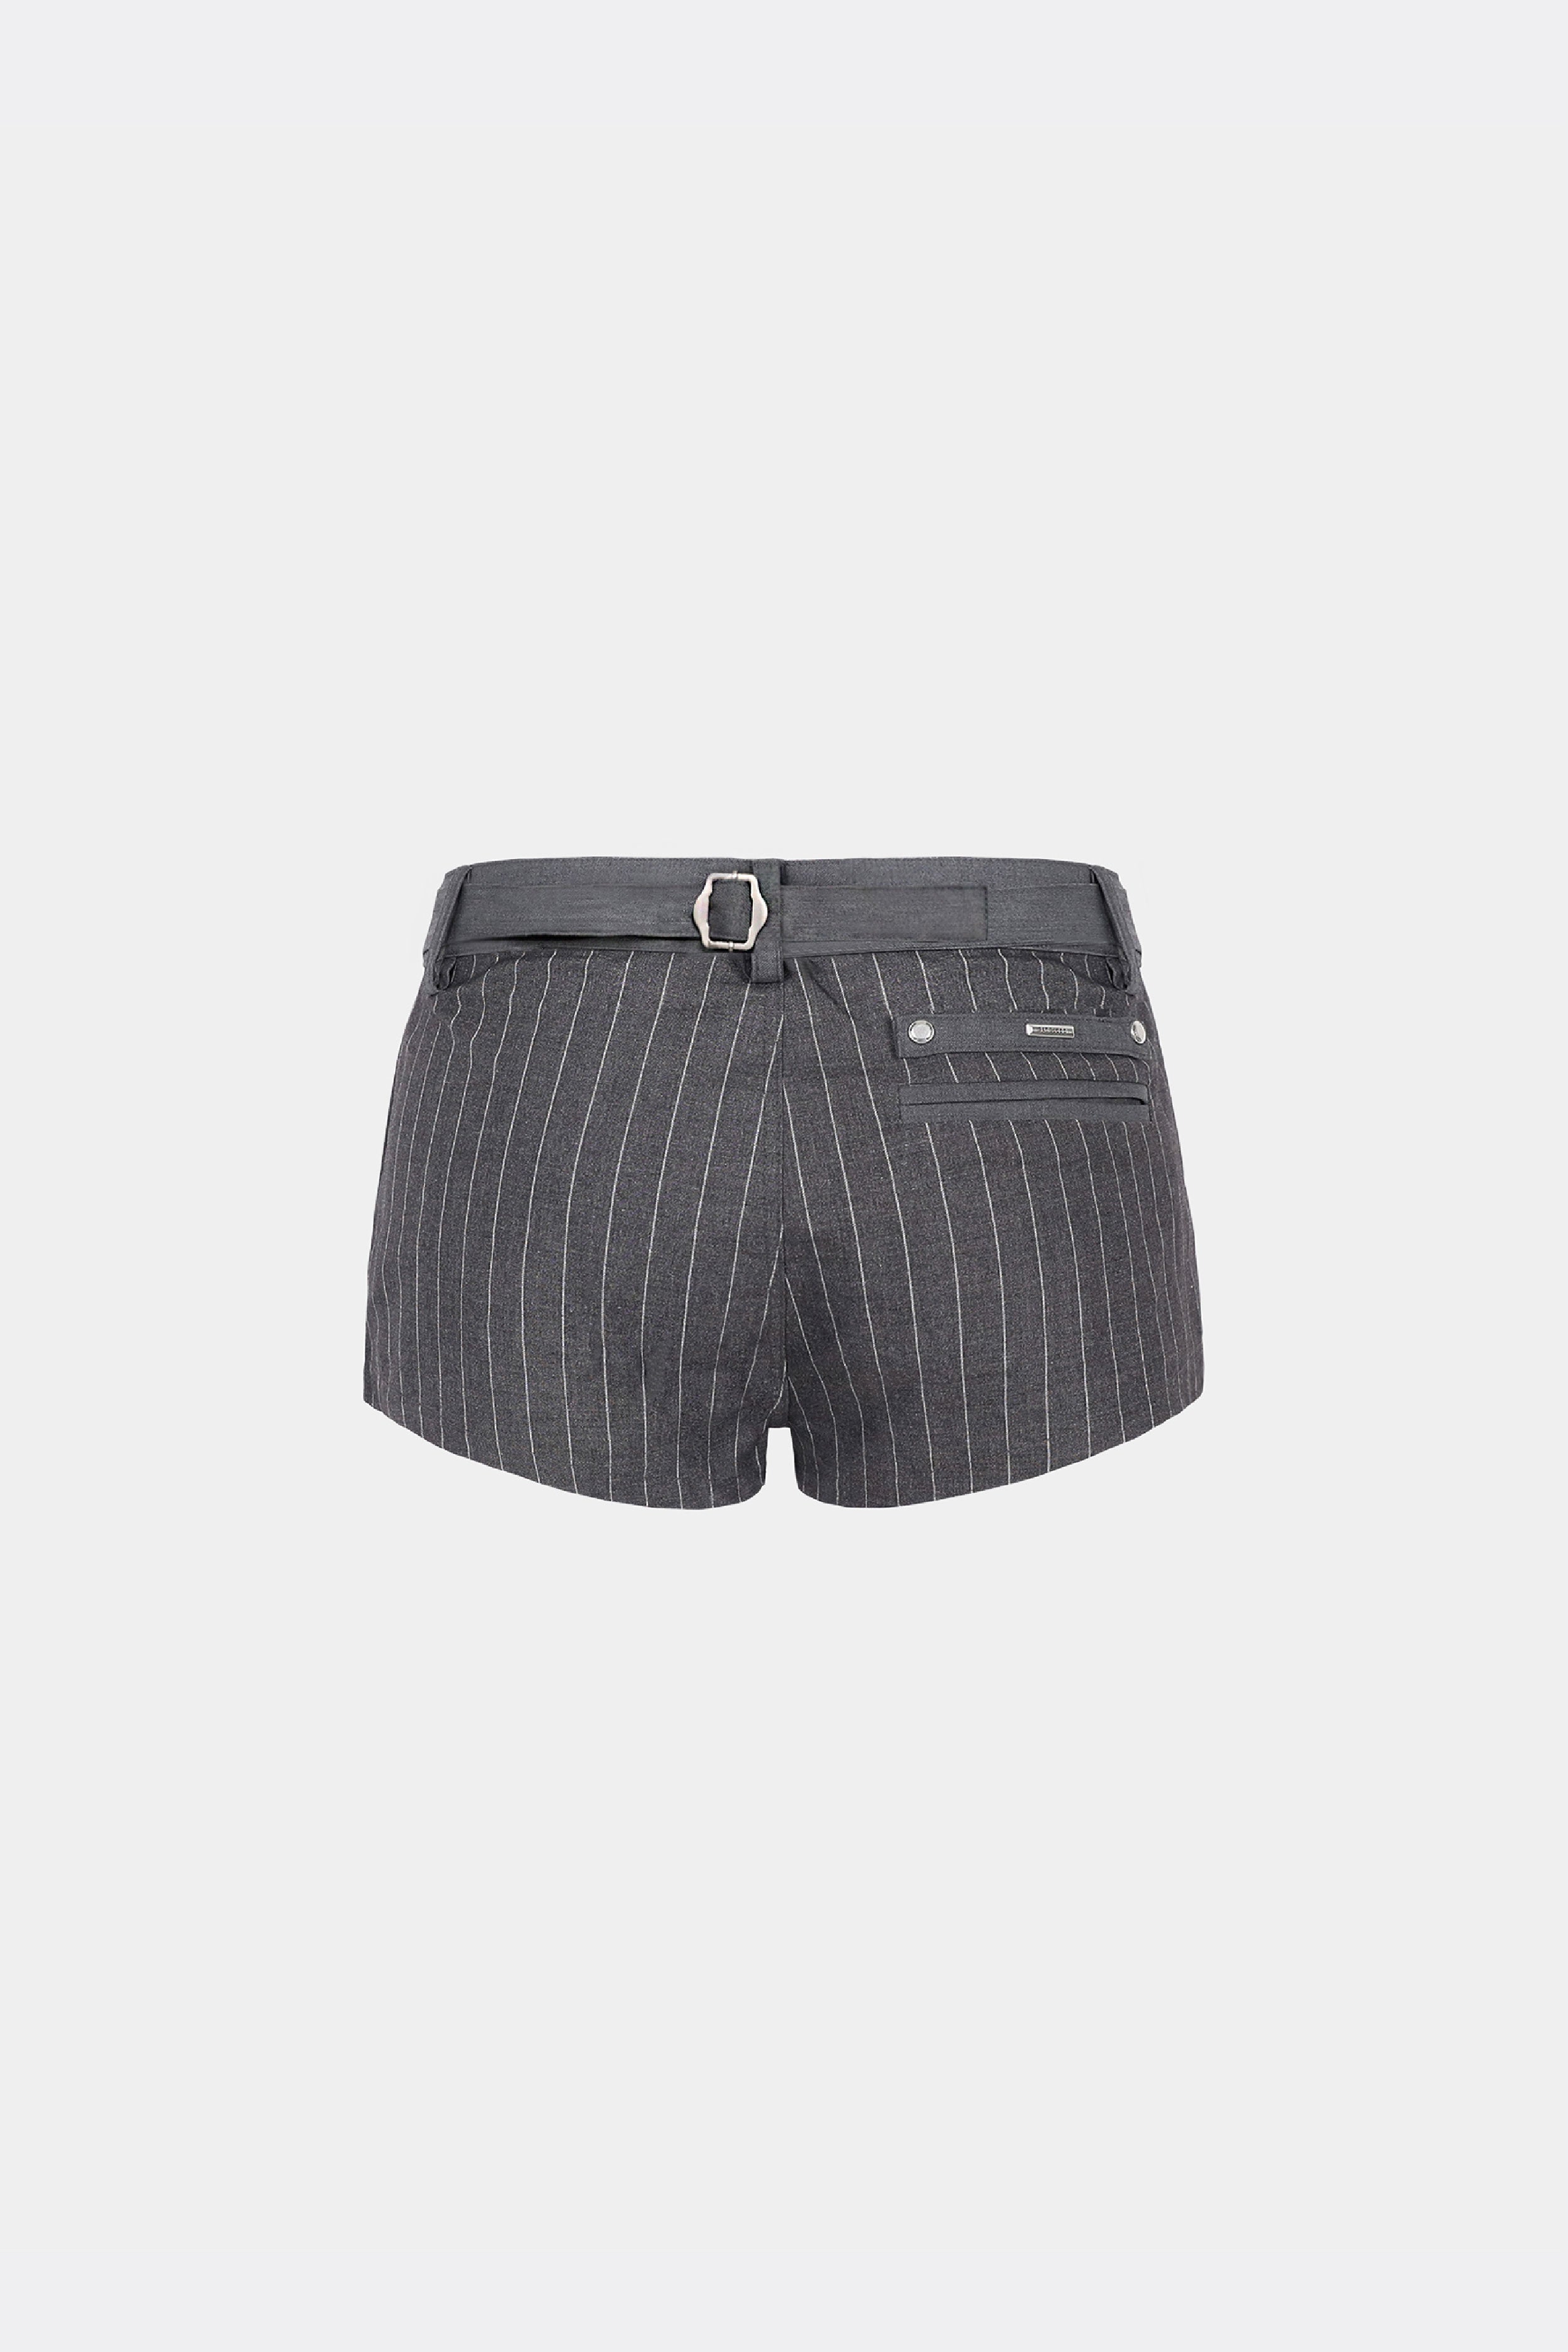 Badblood Proto Gabardine Micro Shorts Striped/Charcoal